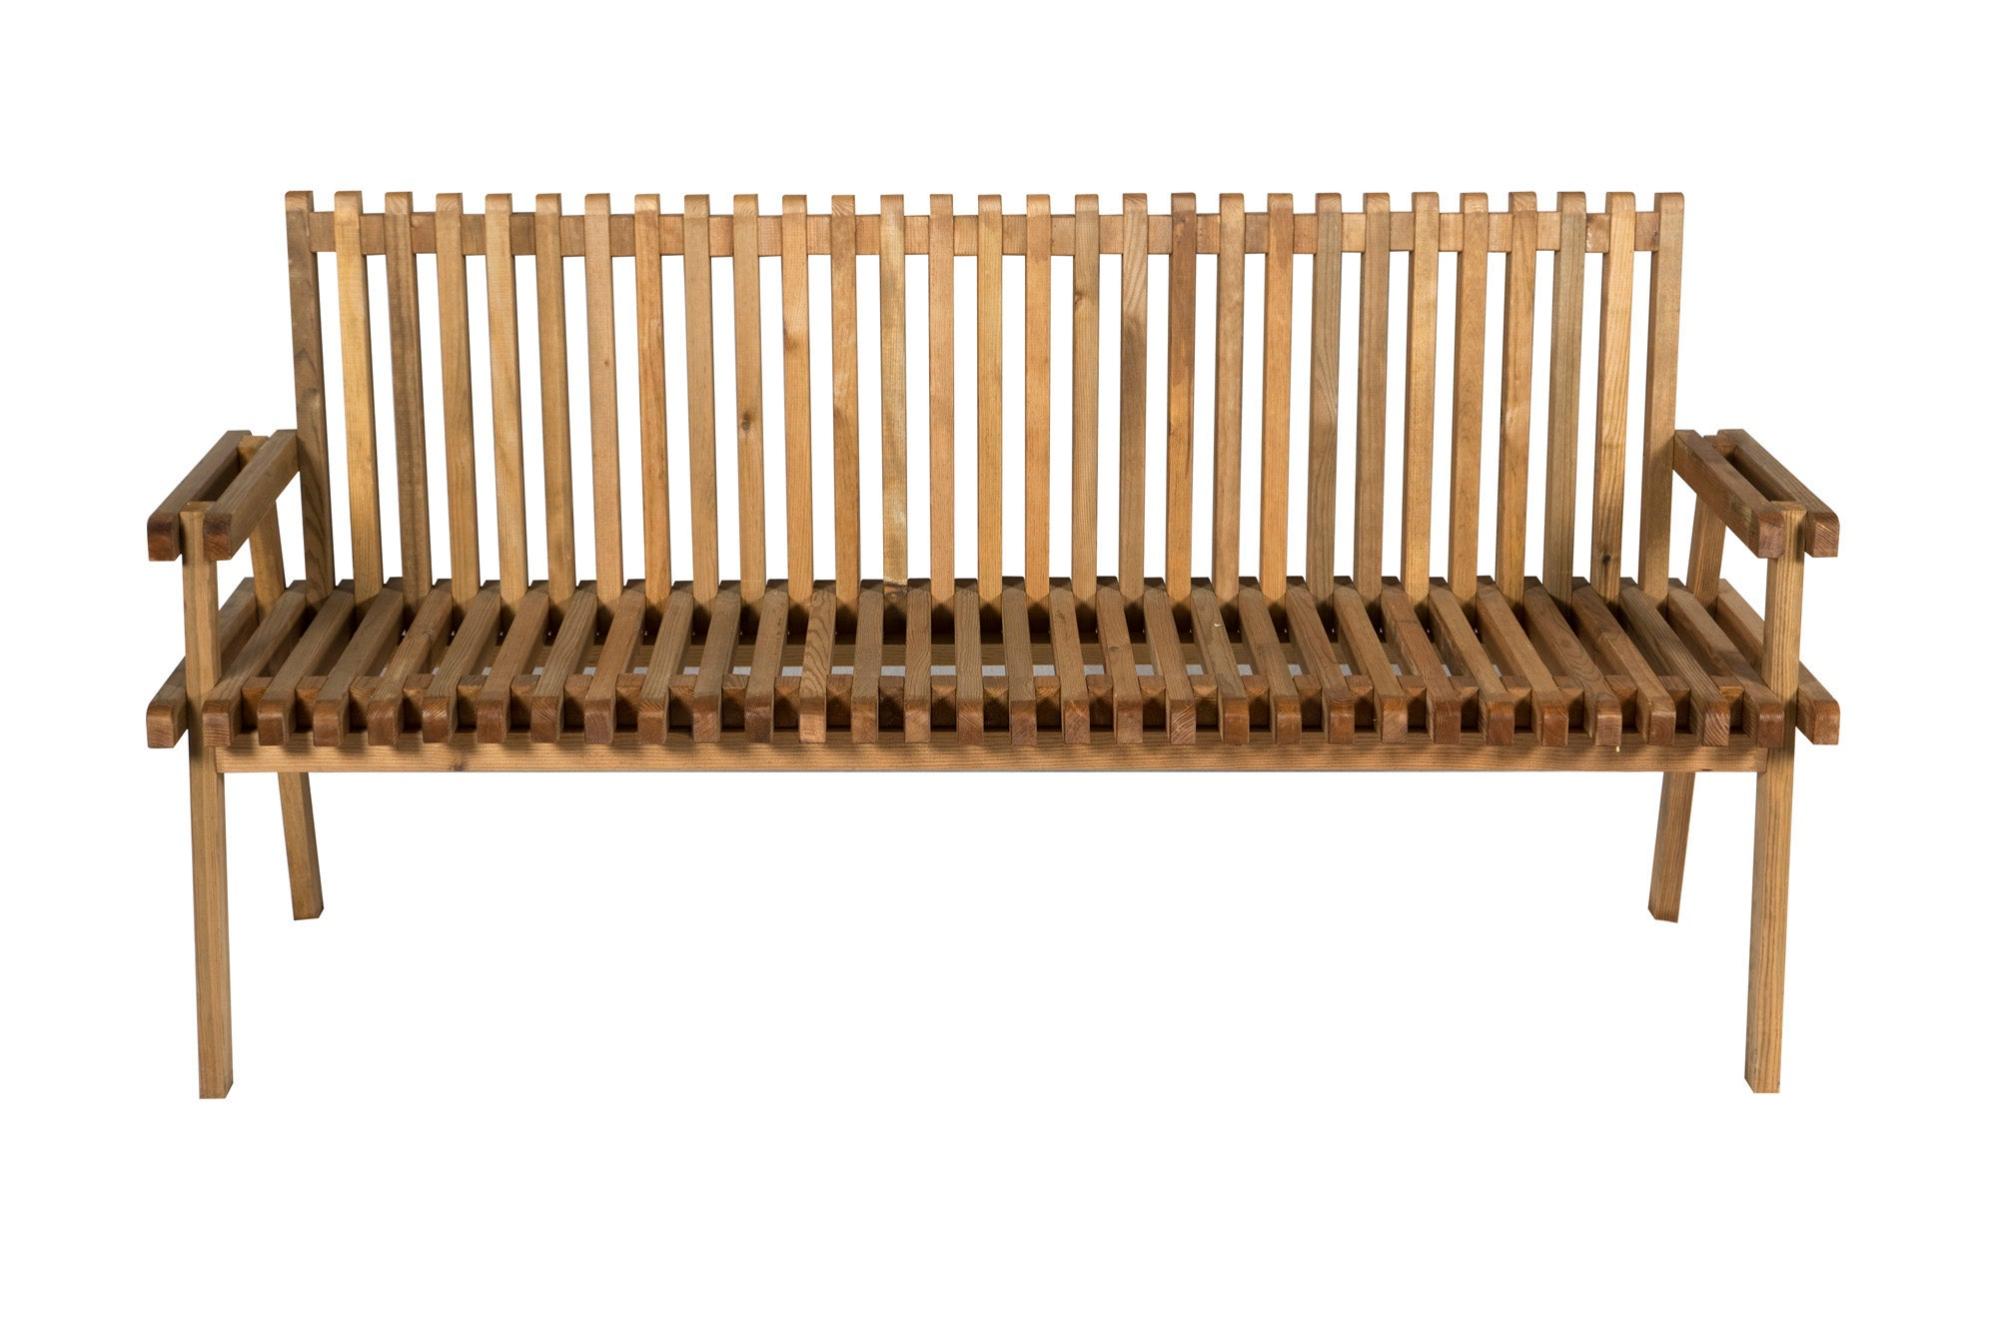 Sofa de exterior de madera brunch con brazos 180 cm